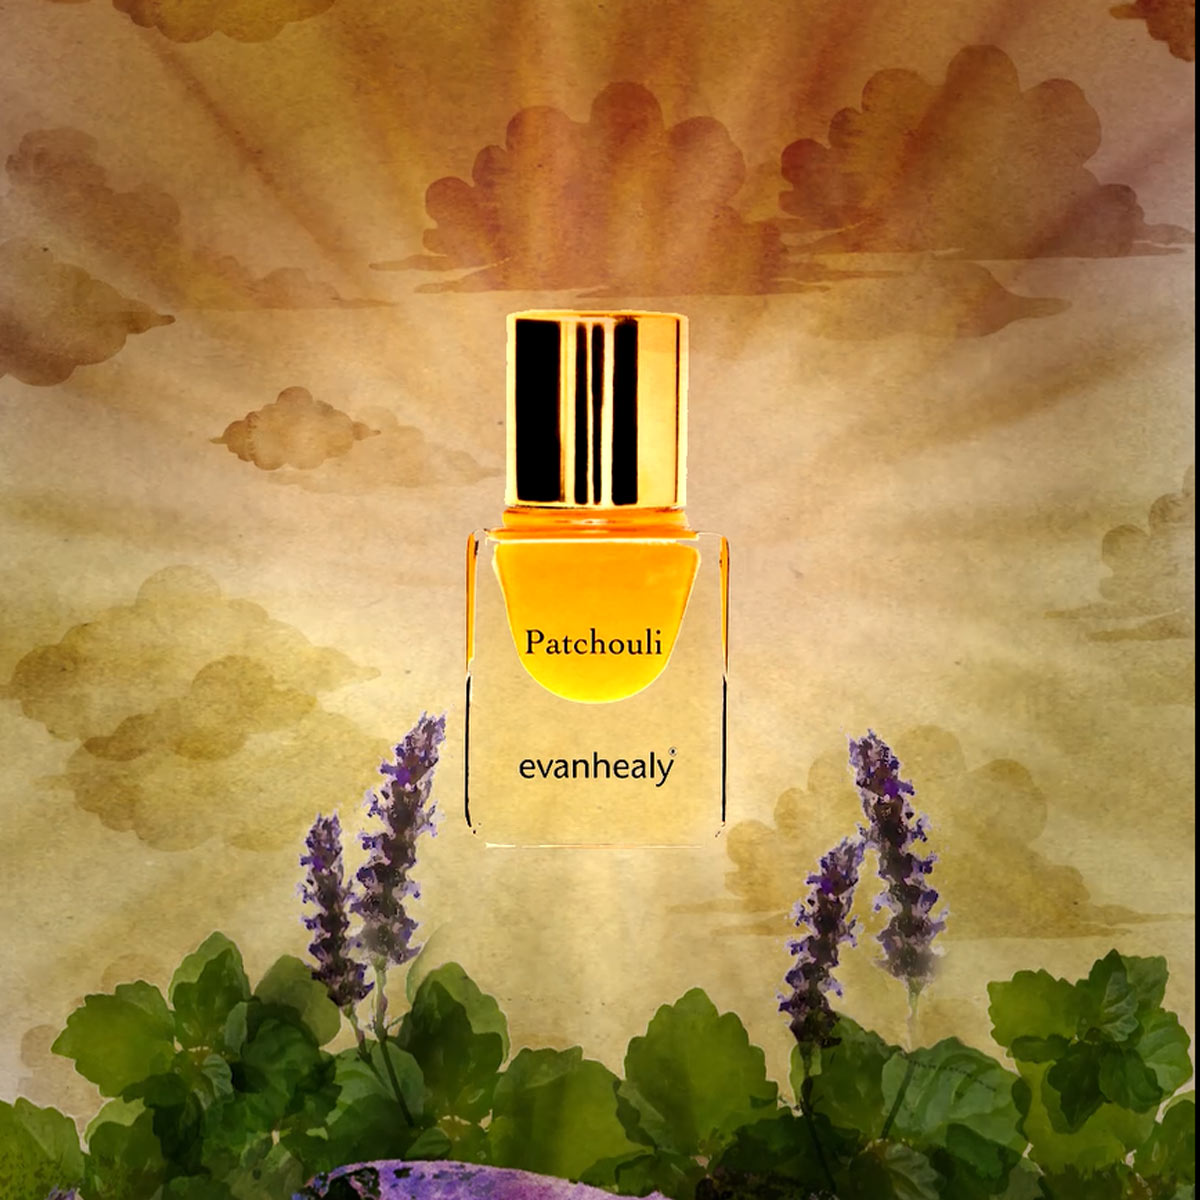 patchouli essential oil perfume illustration